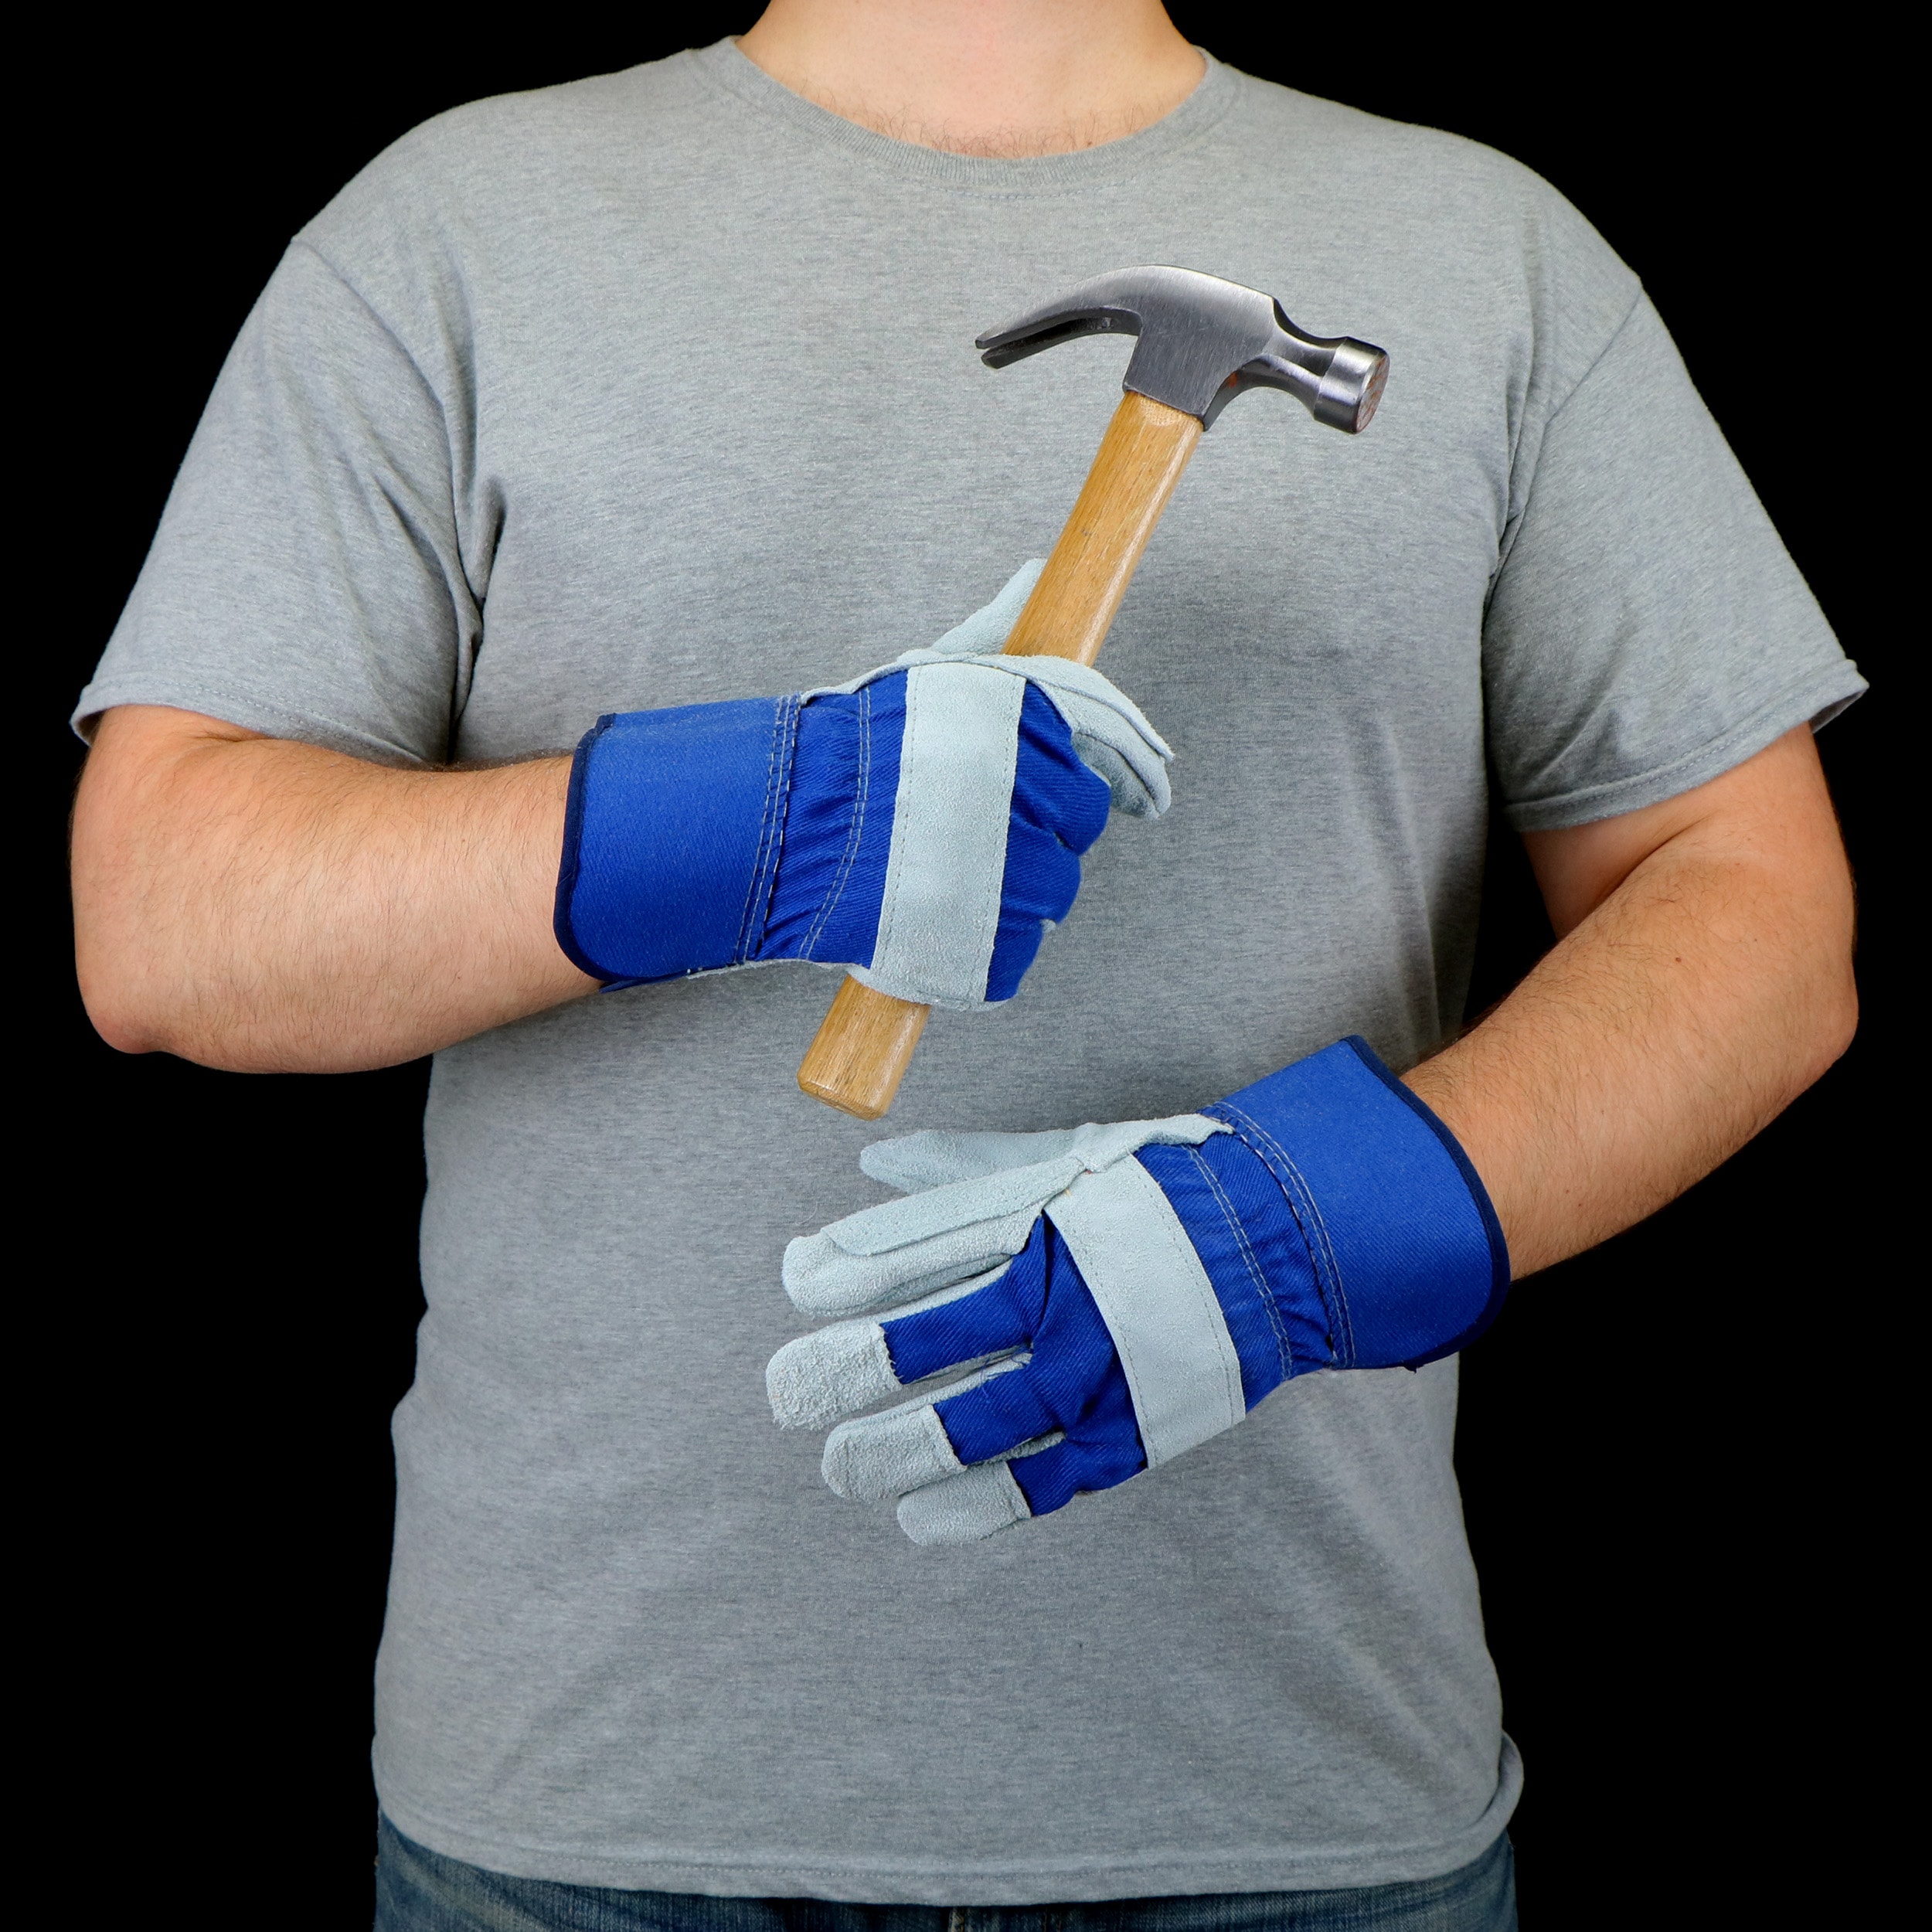 Hawkeye Barbed Wire Gloves (8415-00-926-1674) – Harry J. Epstein Co.